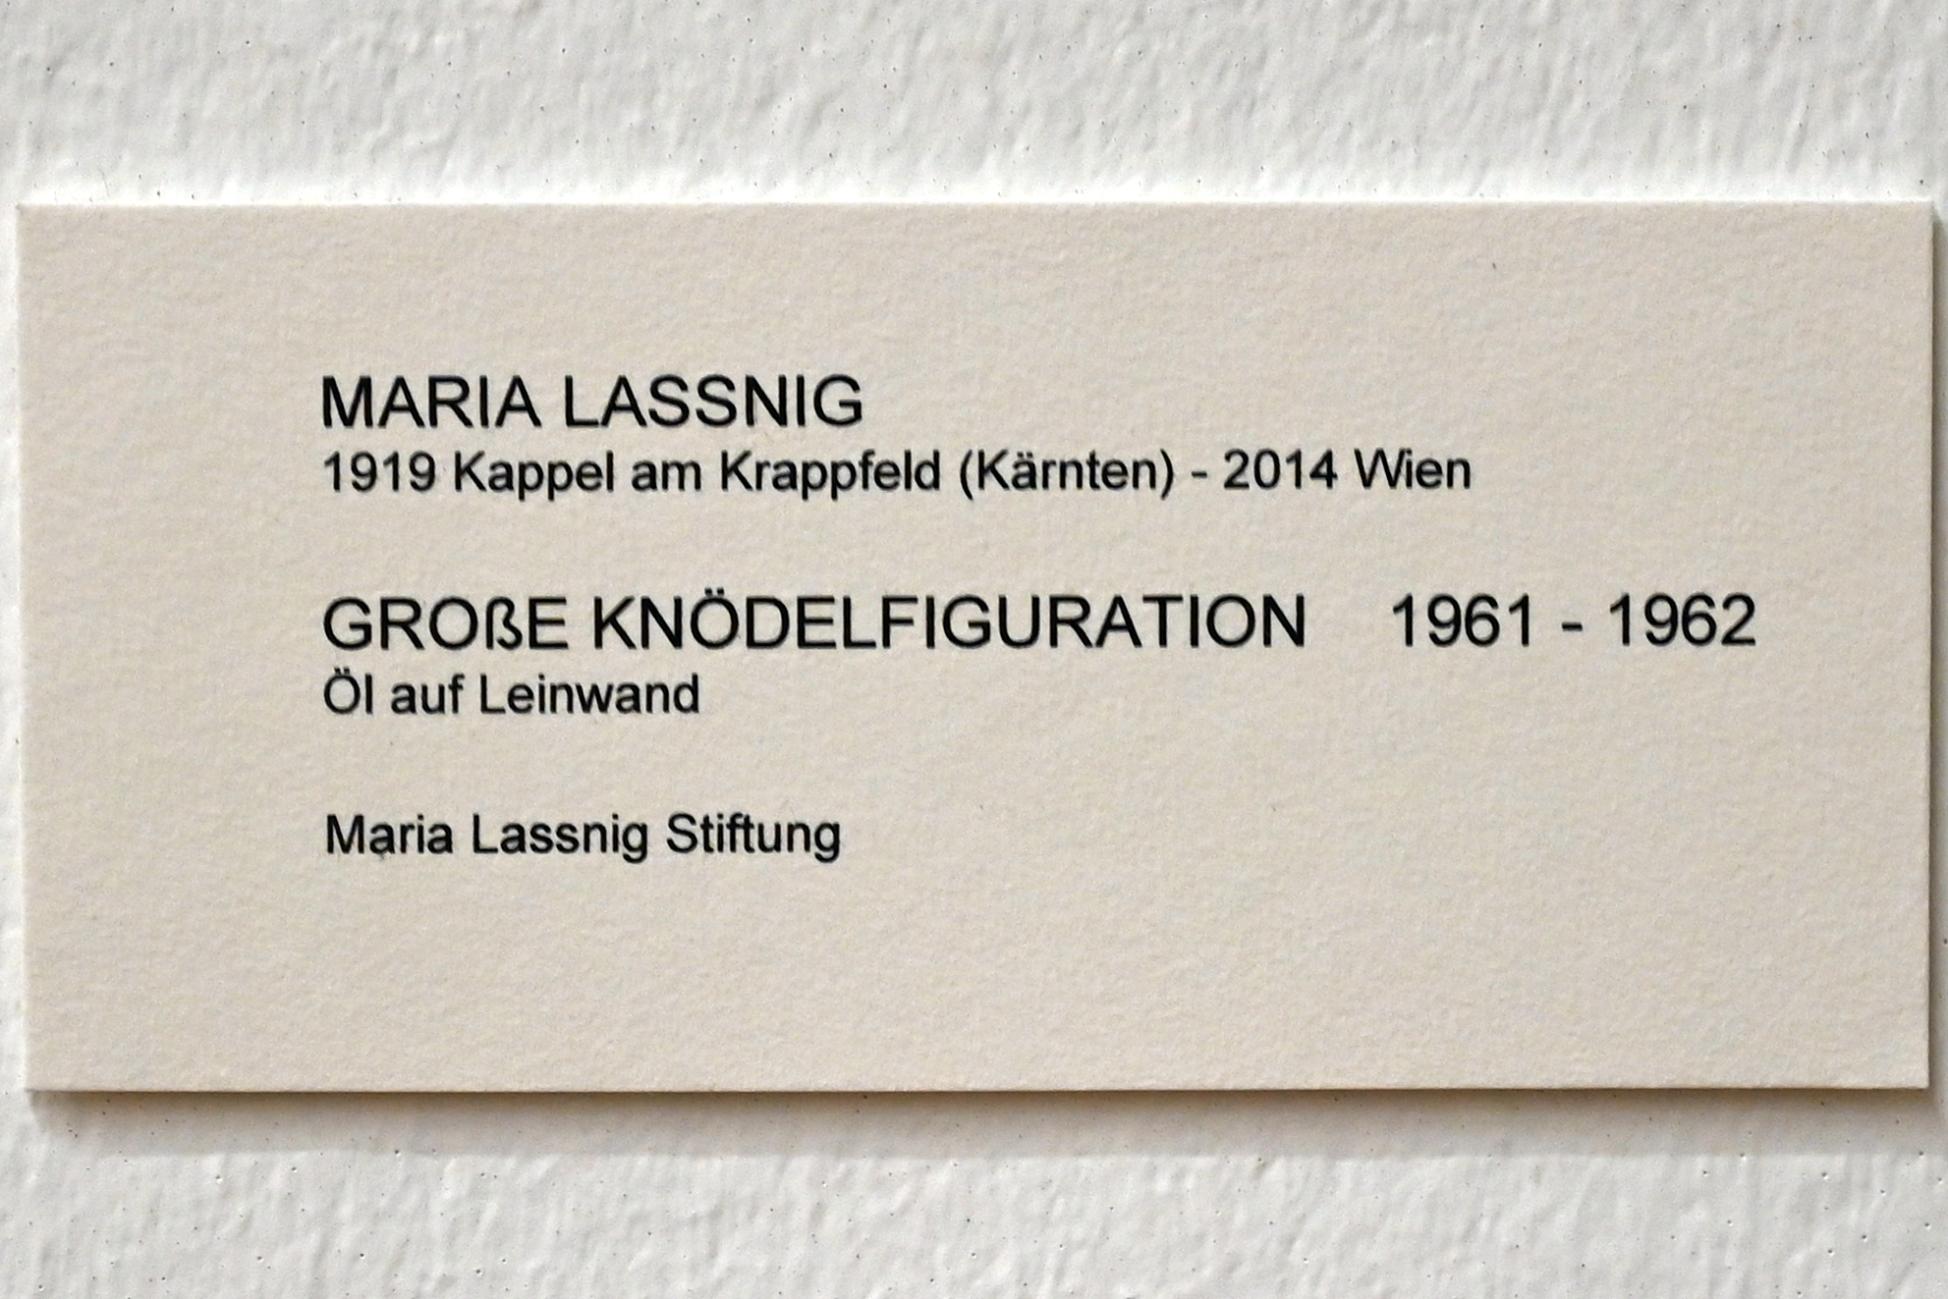 Maria Lassnig (1945–2011), Große Knödelfiguration, Bonn, Kunstmuseum, Ausstellung "Maria Lassnig - Wach bleiben" vom 10.02. - 08.05.2022, Saal 5, 1961–1962, Bild 2/2